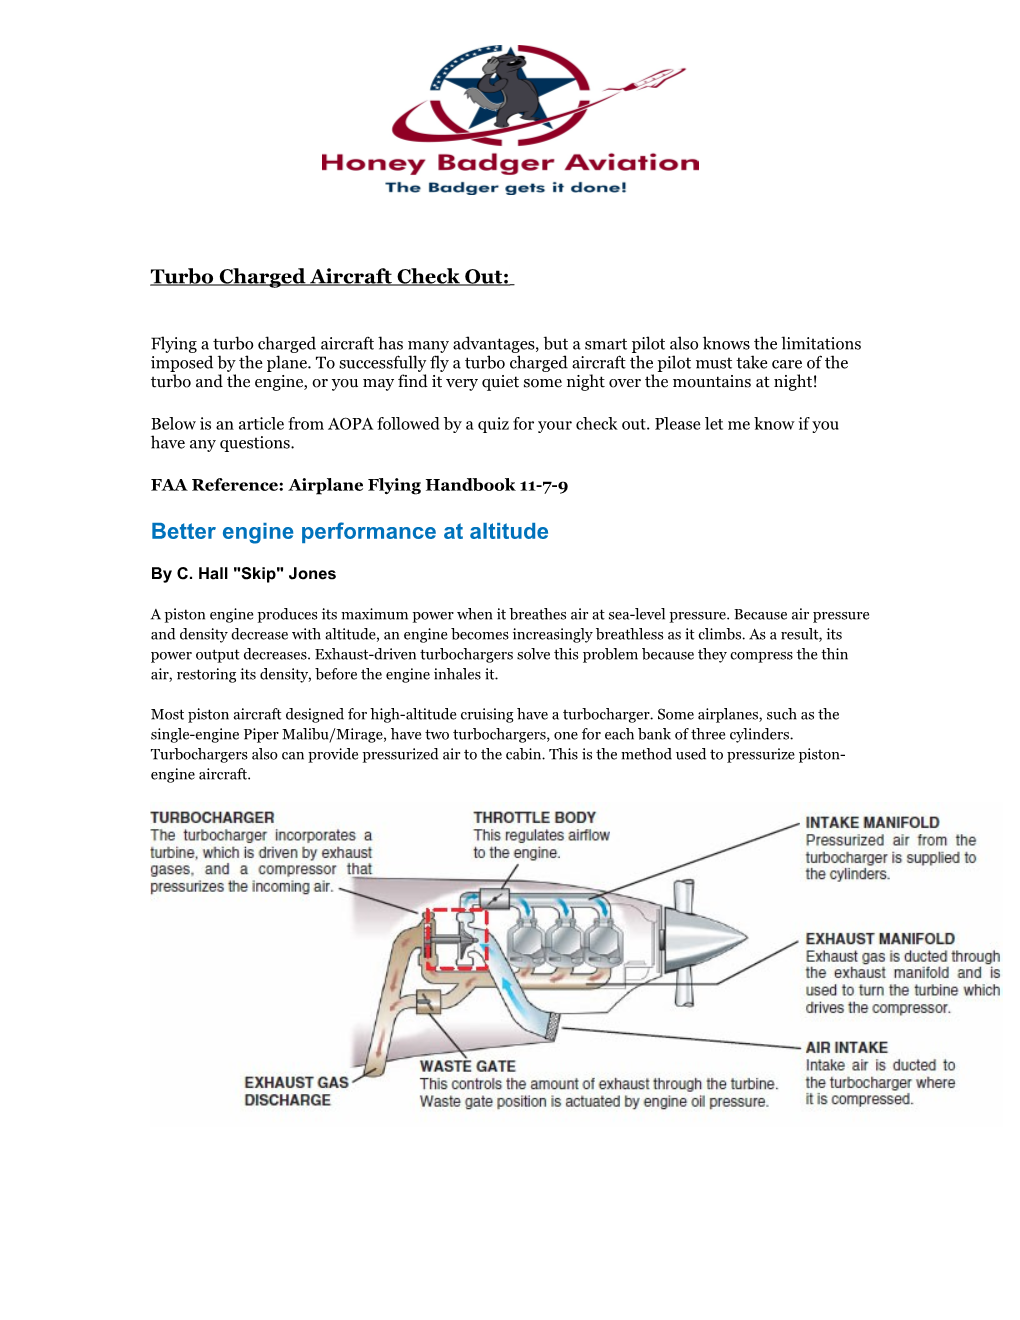 FAA Reference: Airplane Flying Handbook 11-7-9